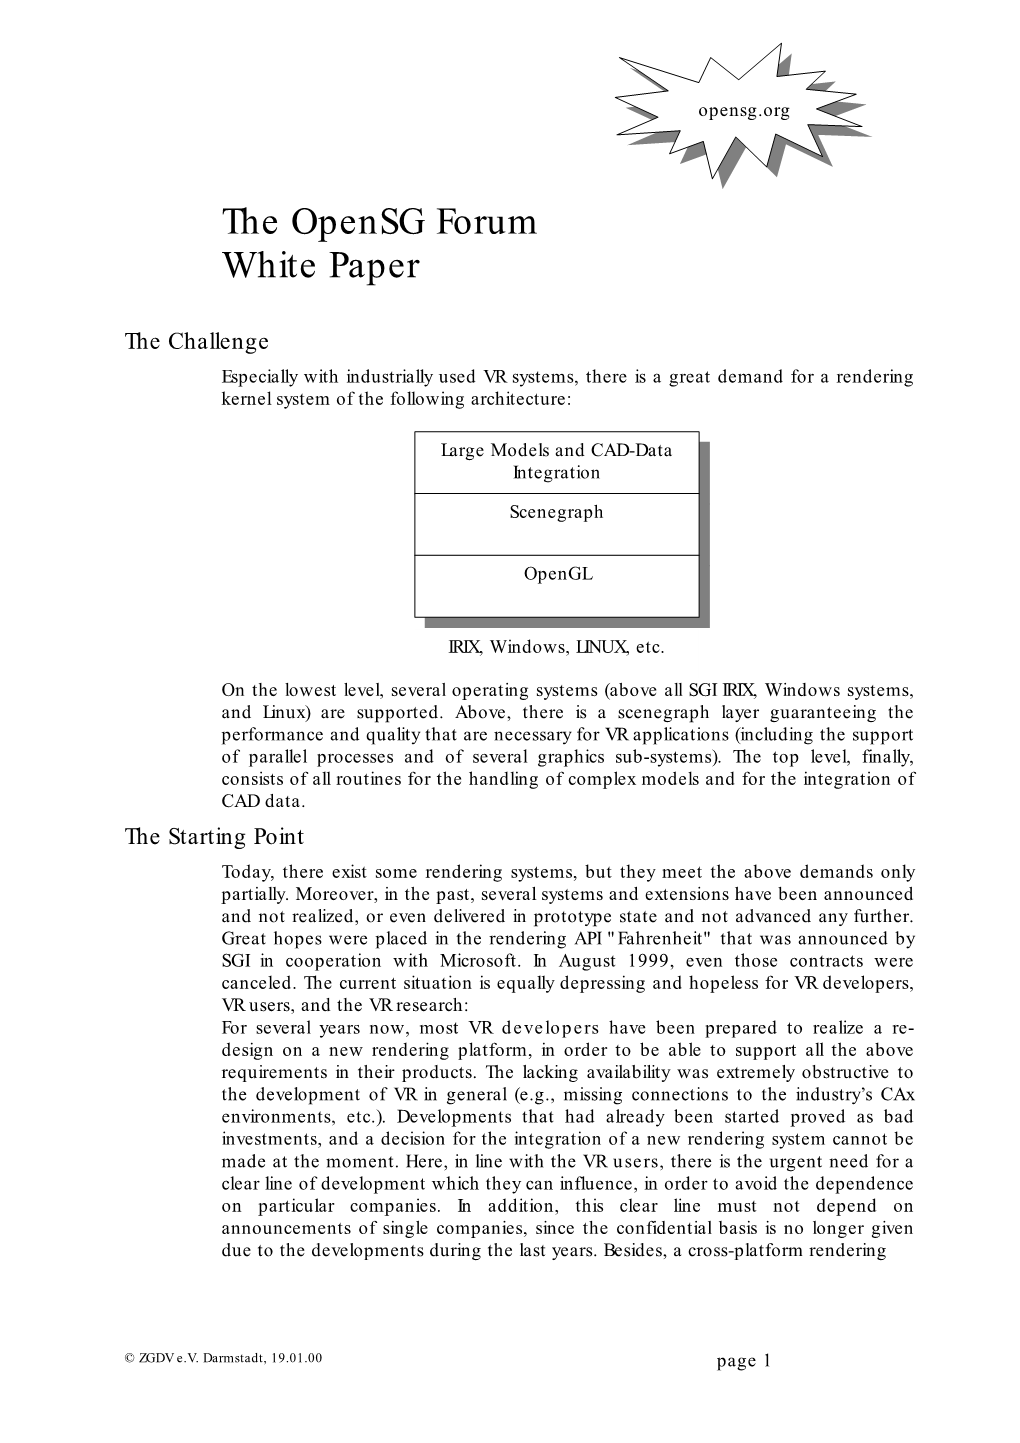 The Opensg Forum White Paper